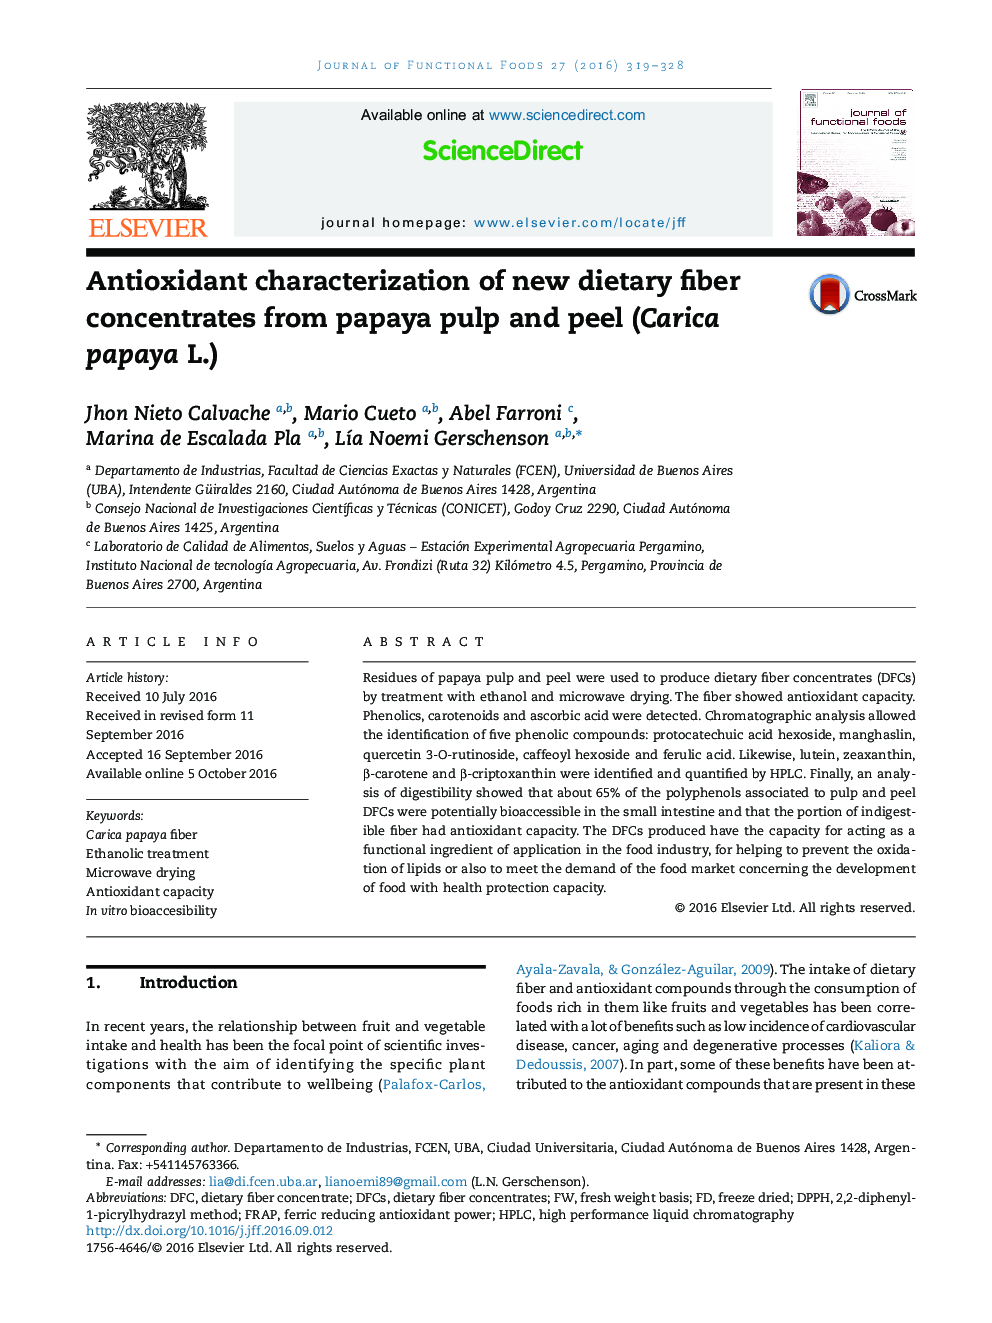 Antioxidant characterization of new dietary fiber concentrates from papaya pulp and peel (Carica papaya L.)